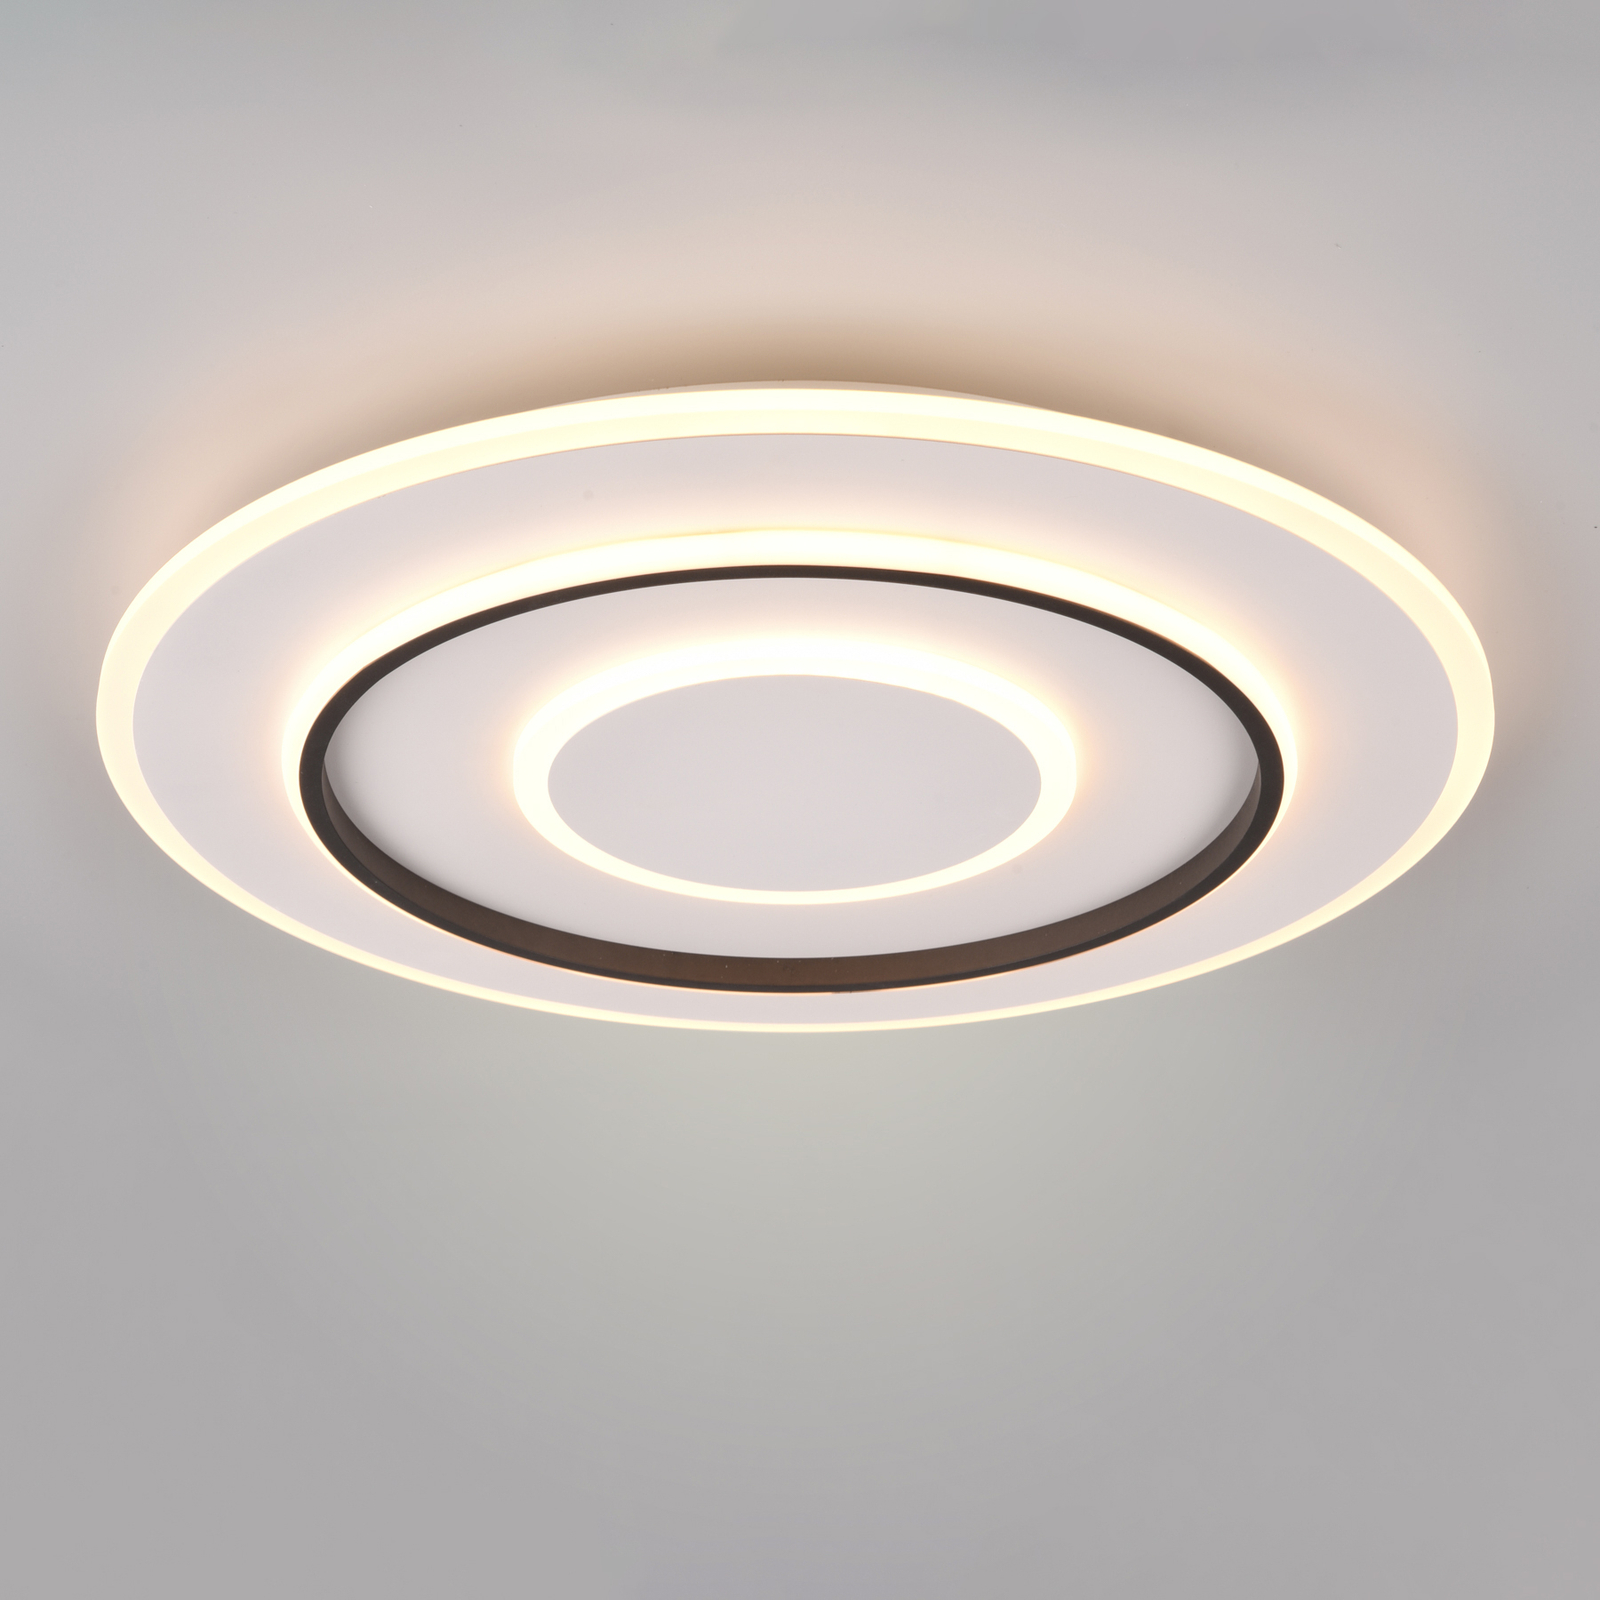 LED ceiling lamp Jora round remote control, Ø 60 cm